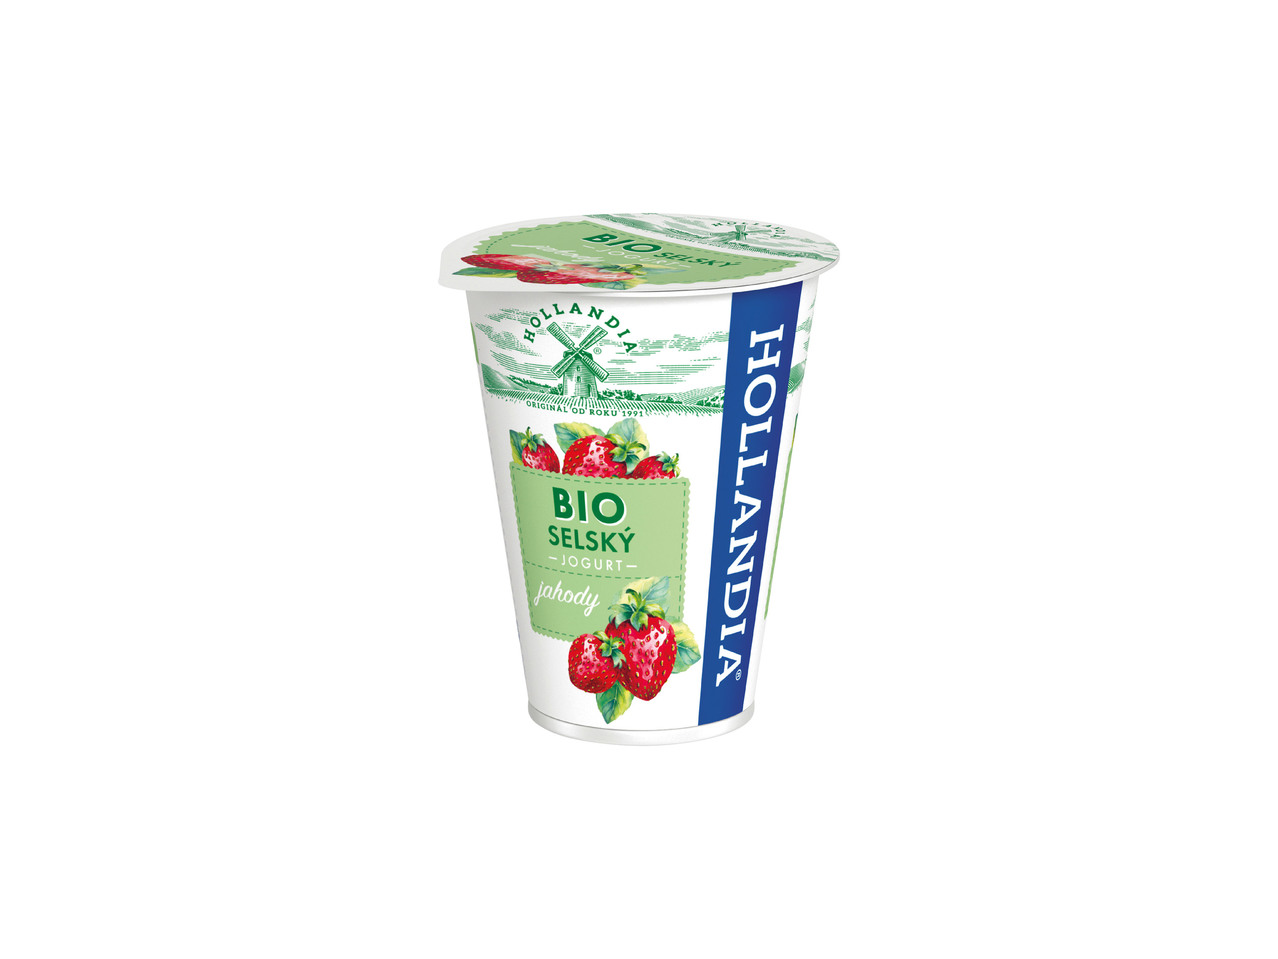 Hollandia Bio selský jogurt